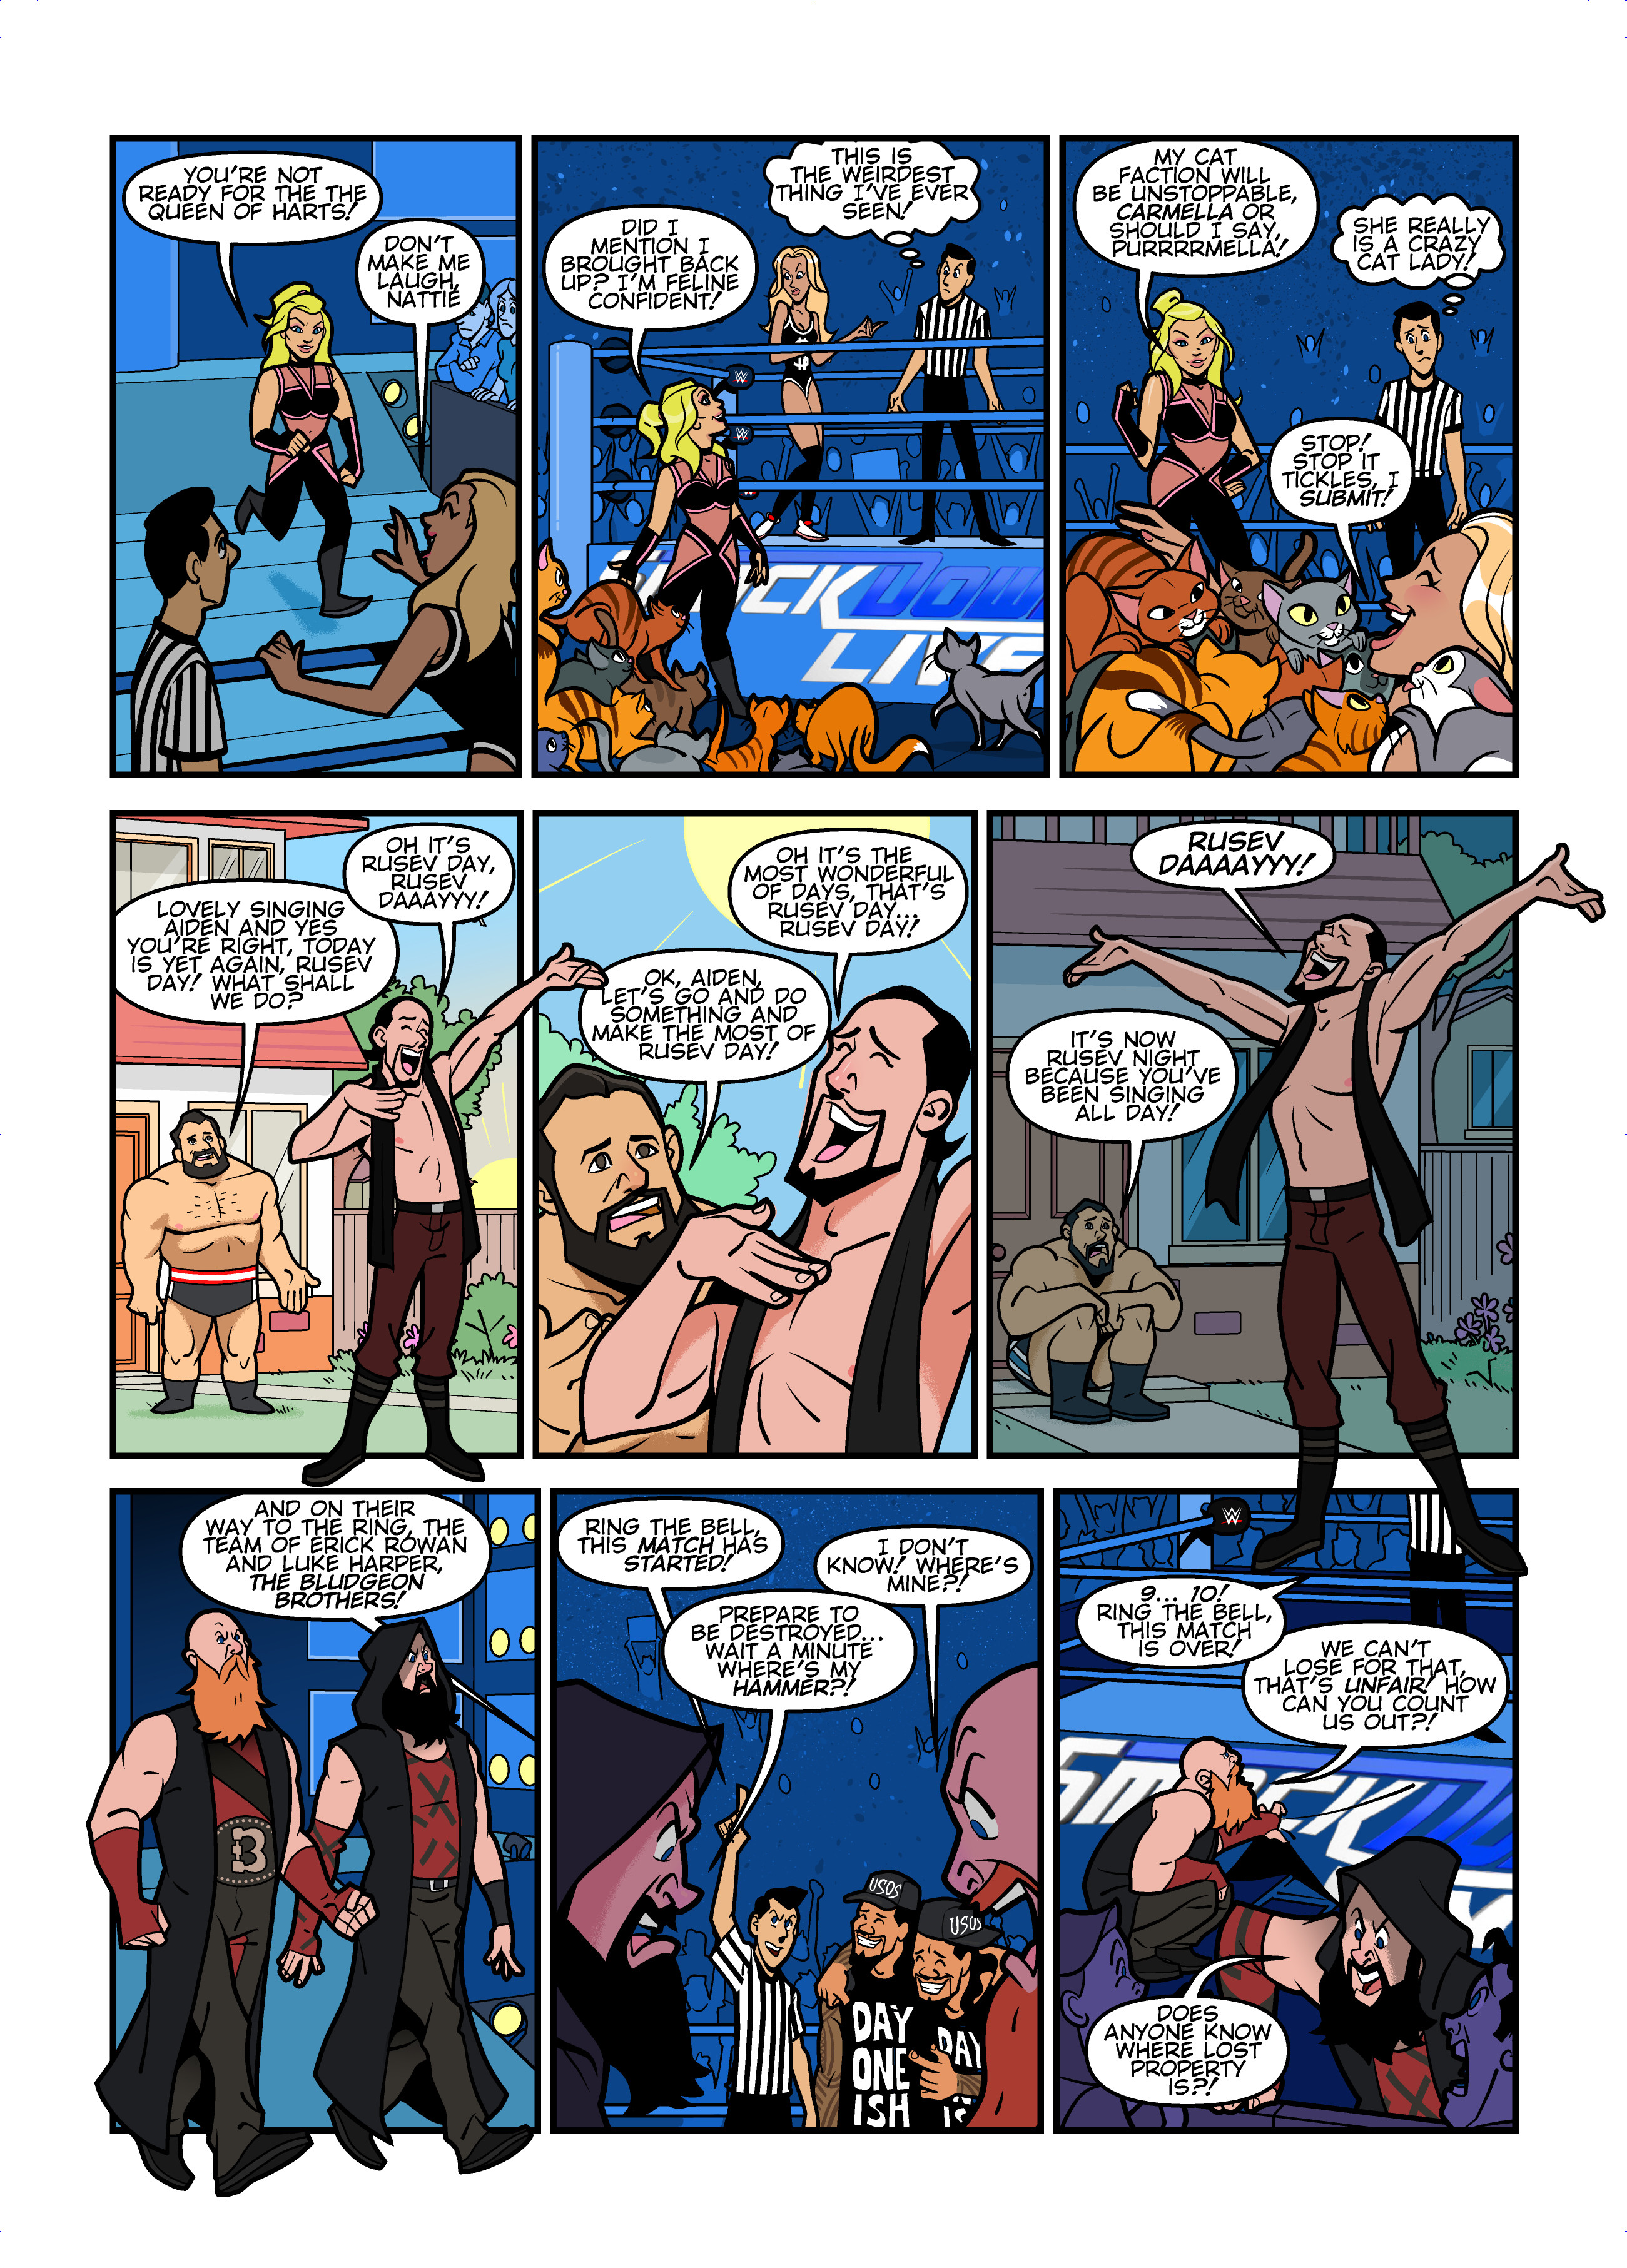 WWE Smackdown Live comic strips for WWE Kids Magazine #133